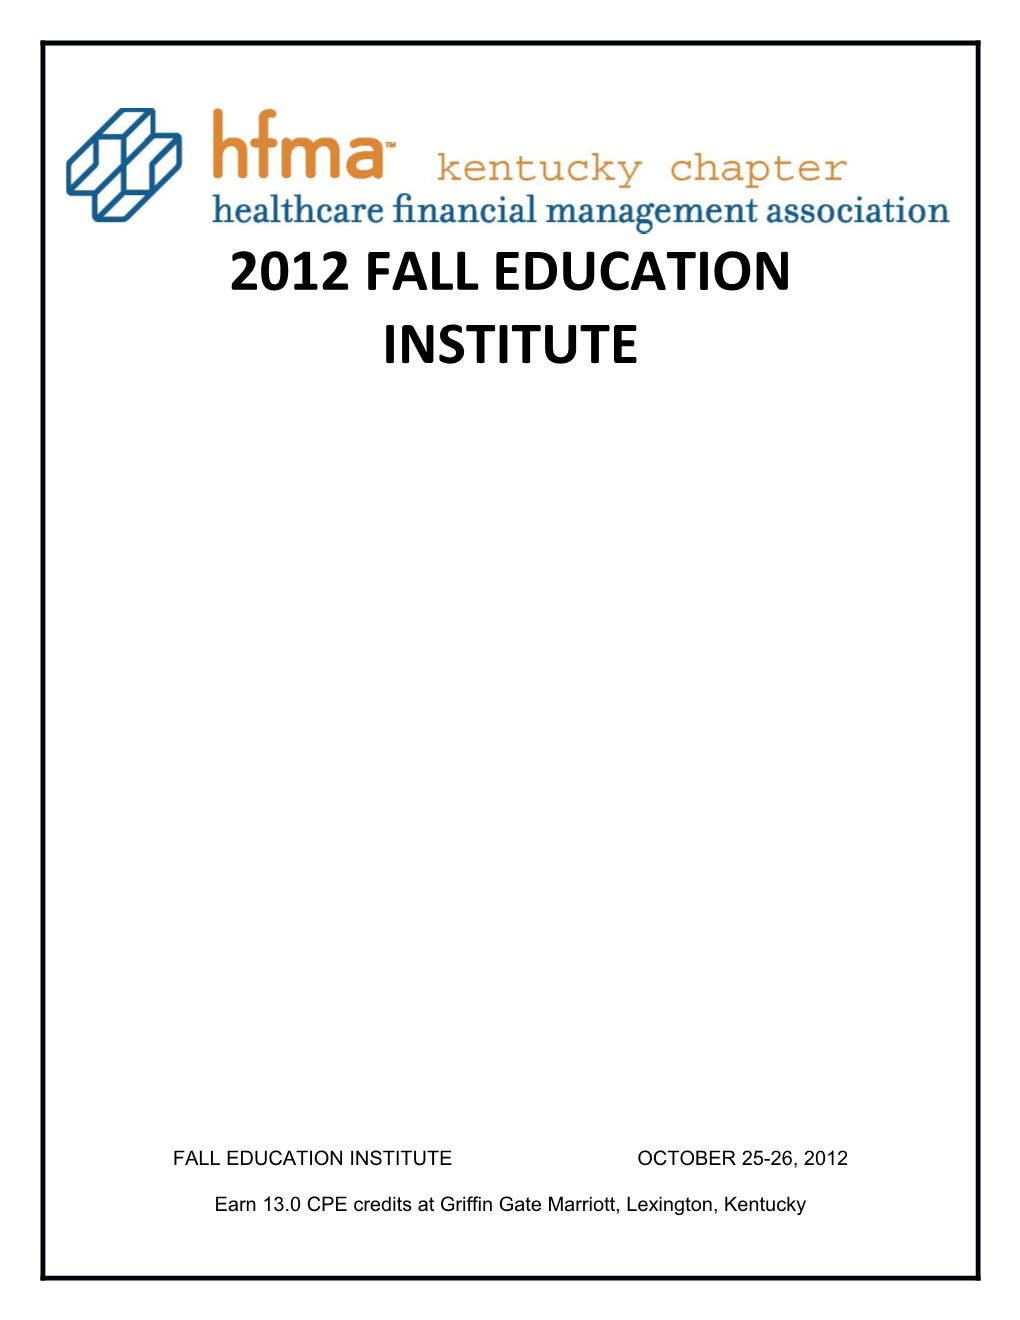 2012 Fall Education Institute